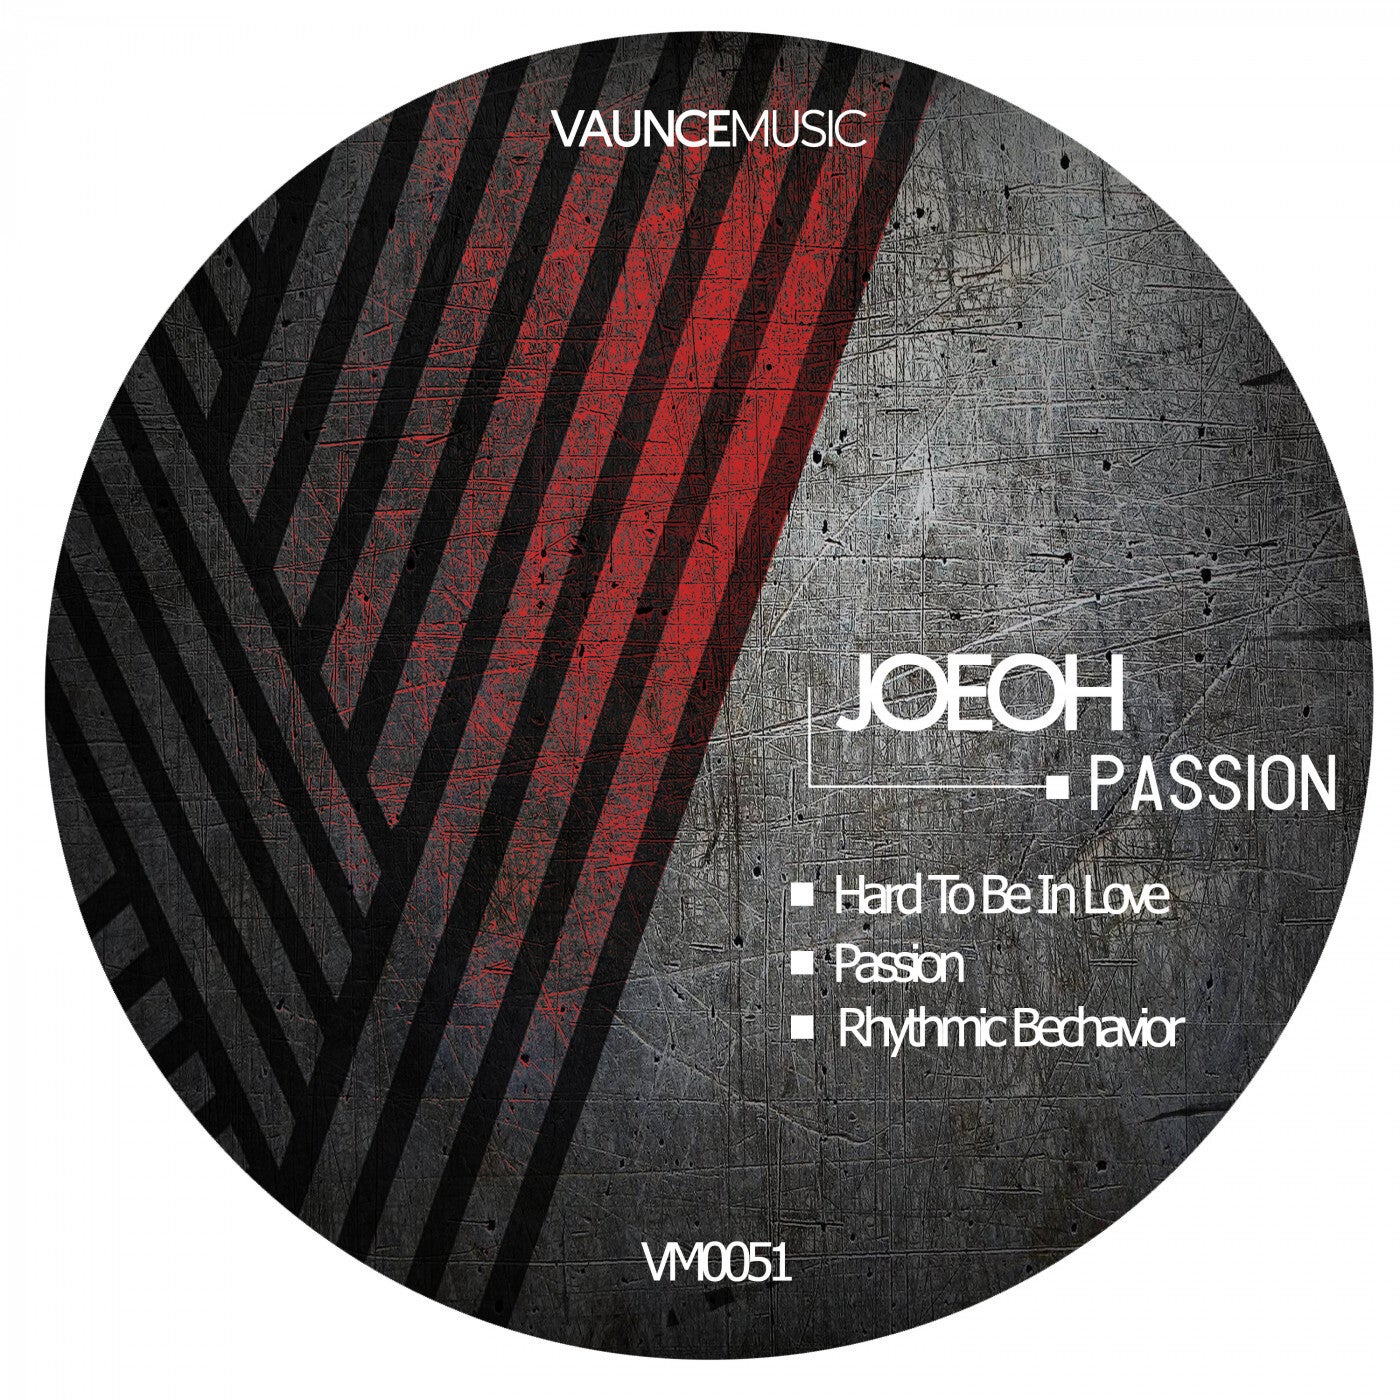 Joeoh – Passion [VM0051]